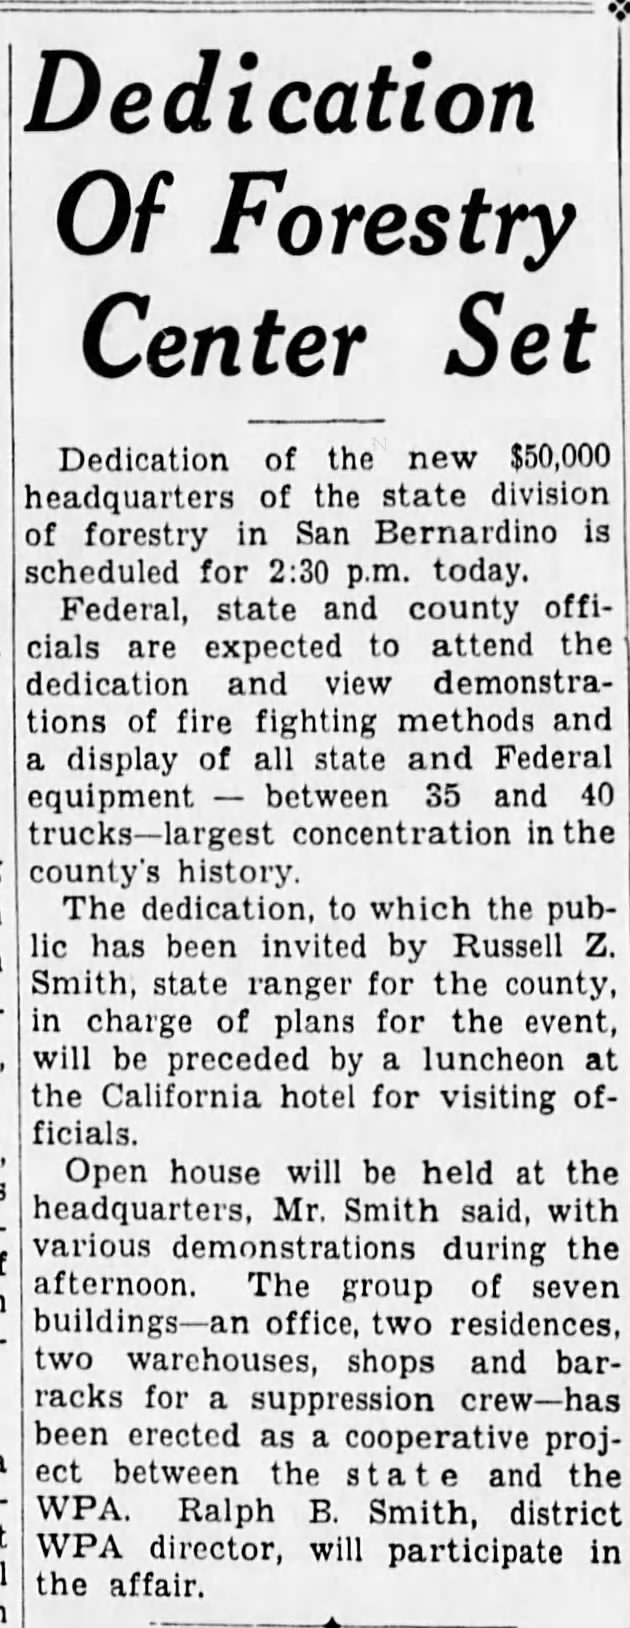 Dedication of Forestry Center Set  4/19/1937